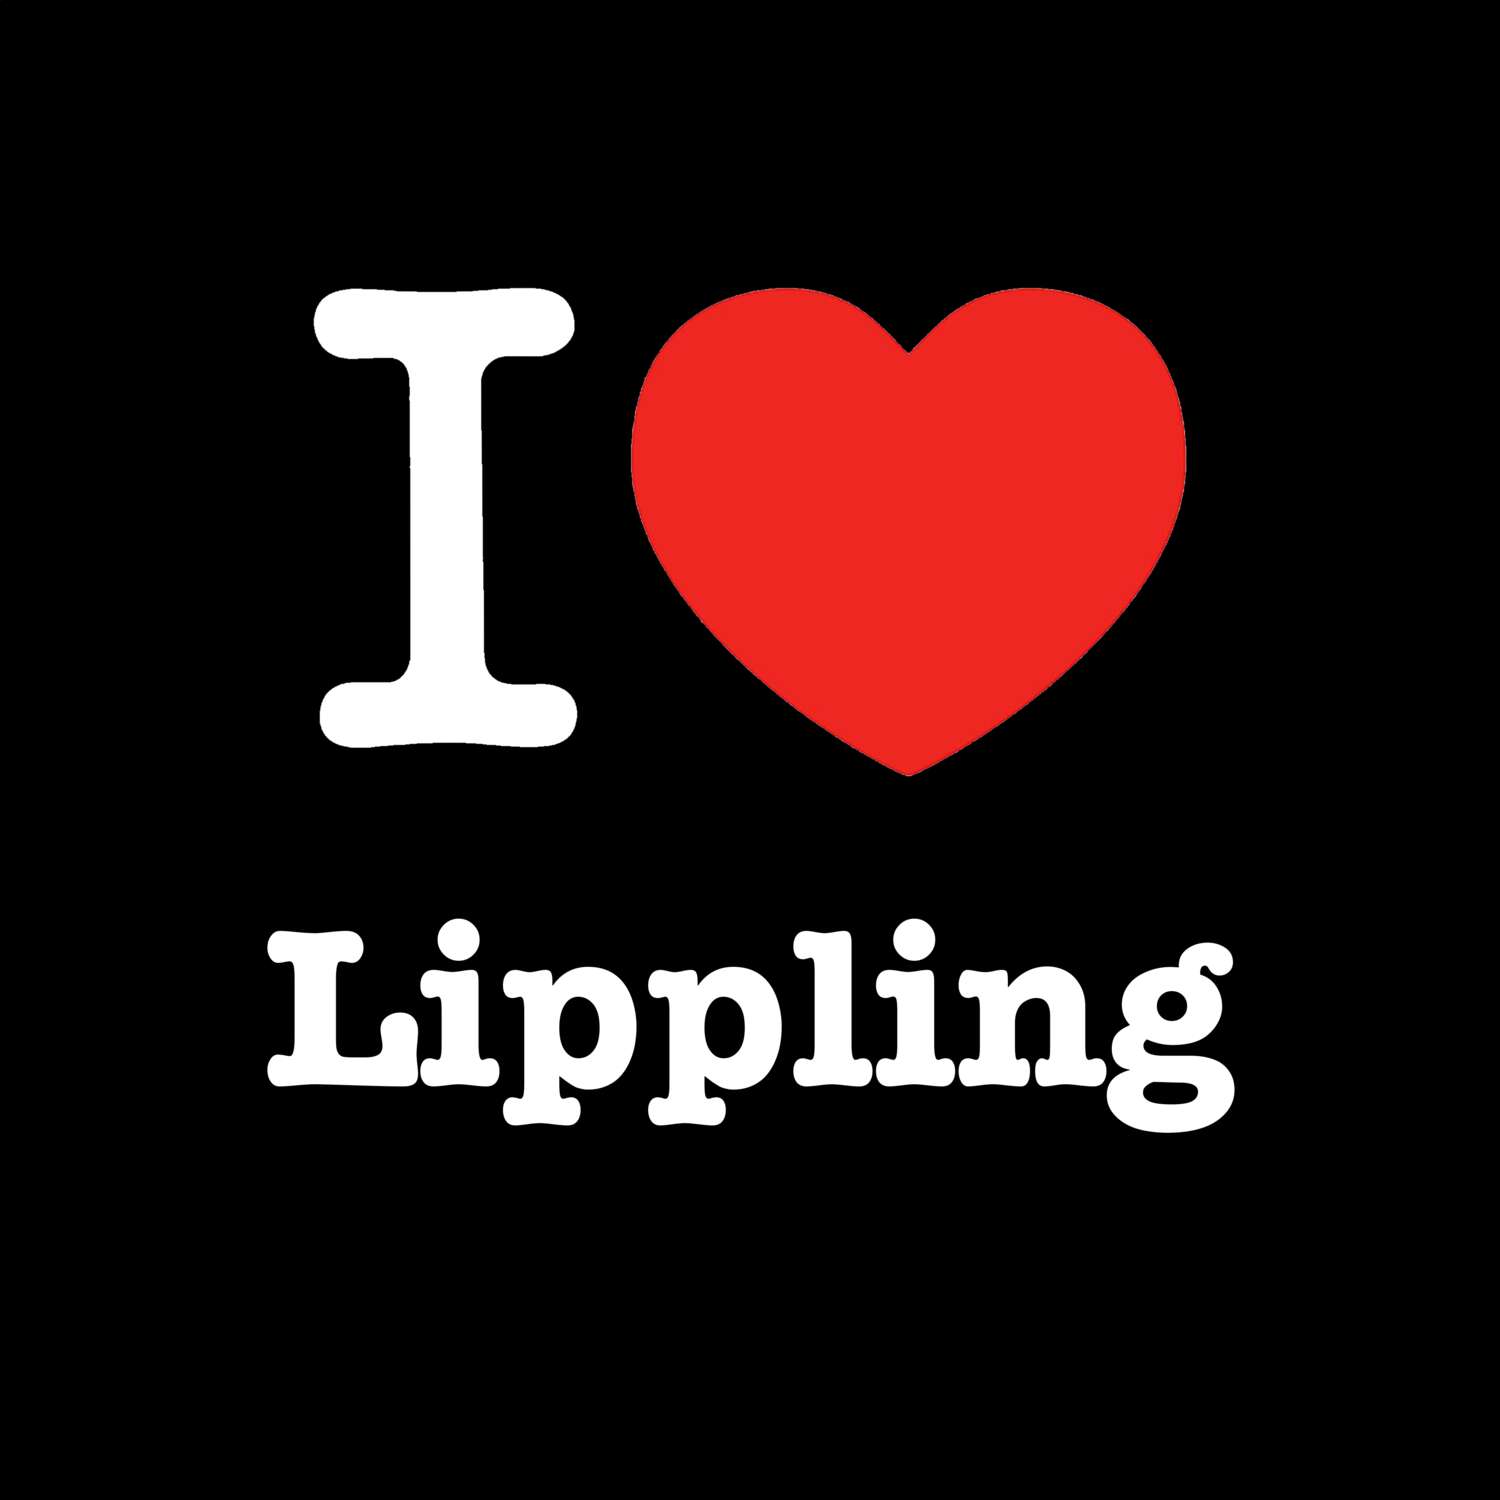 Lippling T-Shirt »I love«